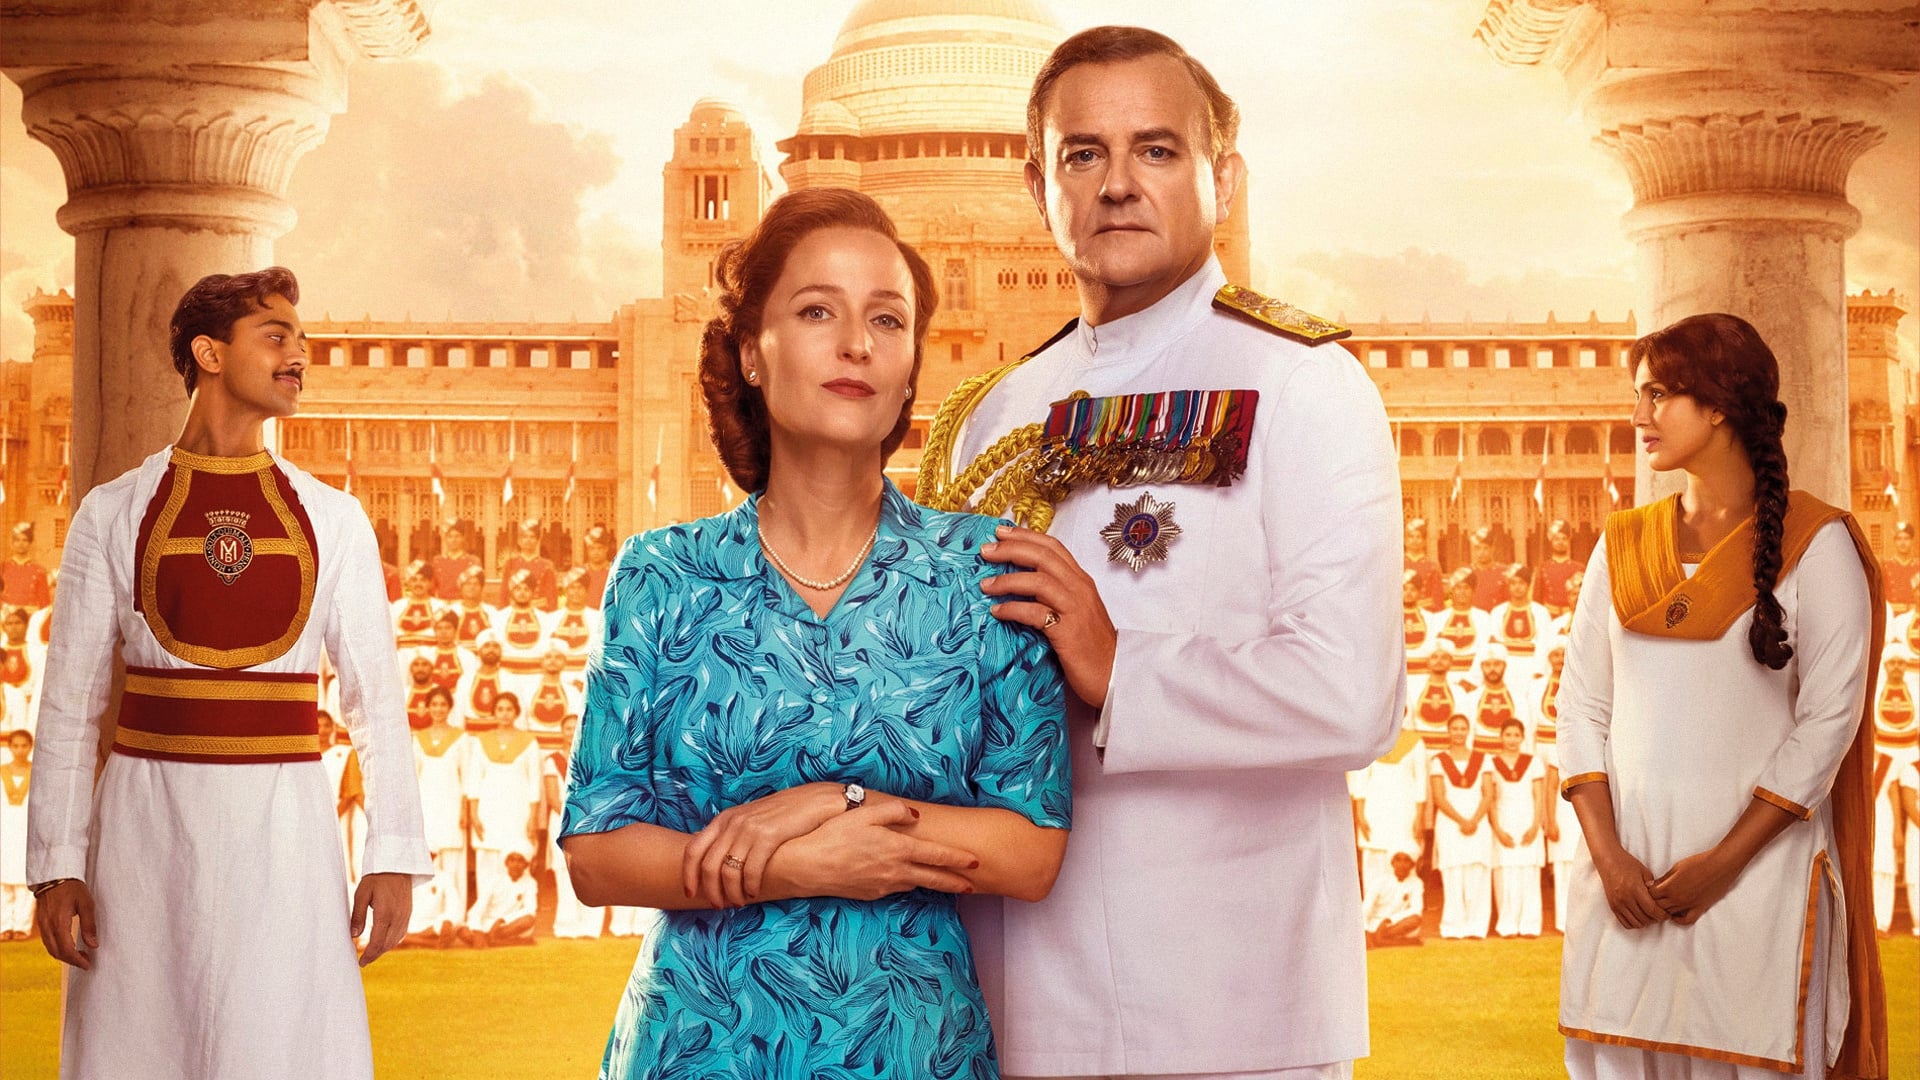 Le dernier vice-roi des Indes en Streaming VF GRATUIT Complet HD 2020 - Le Dernier Vice Roi Des Indes Netflix